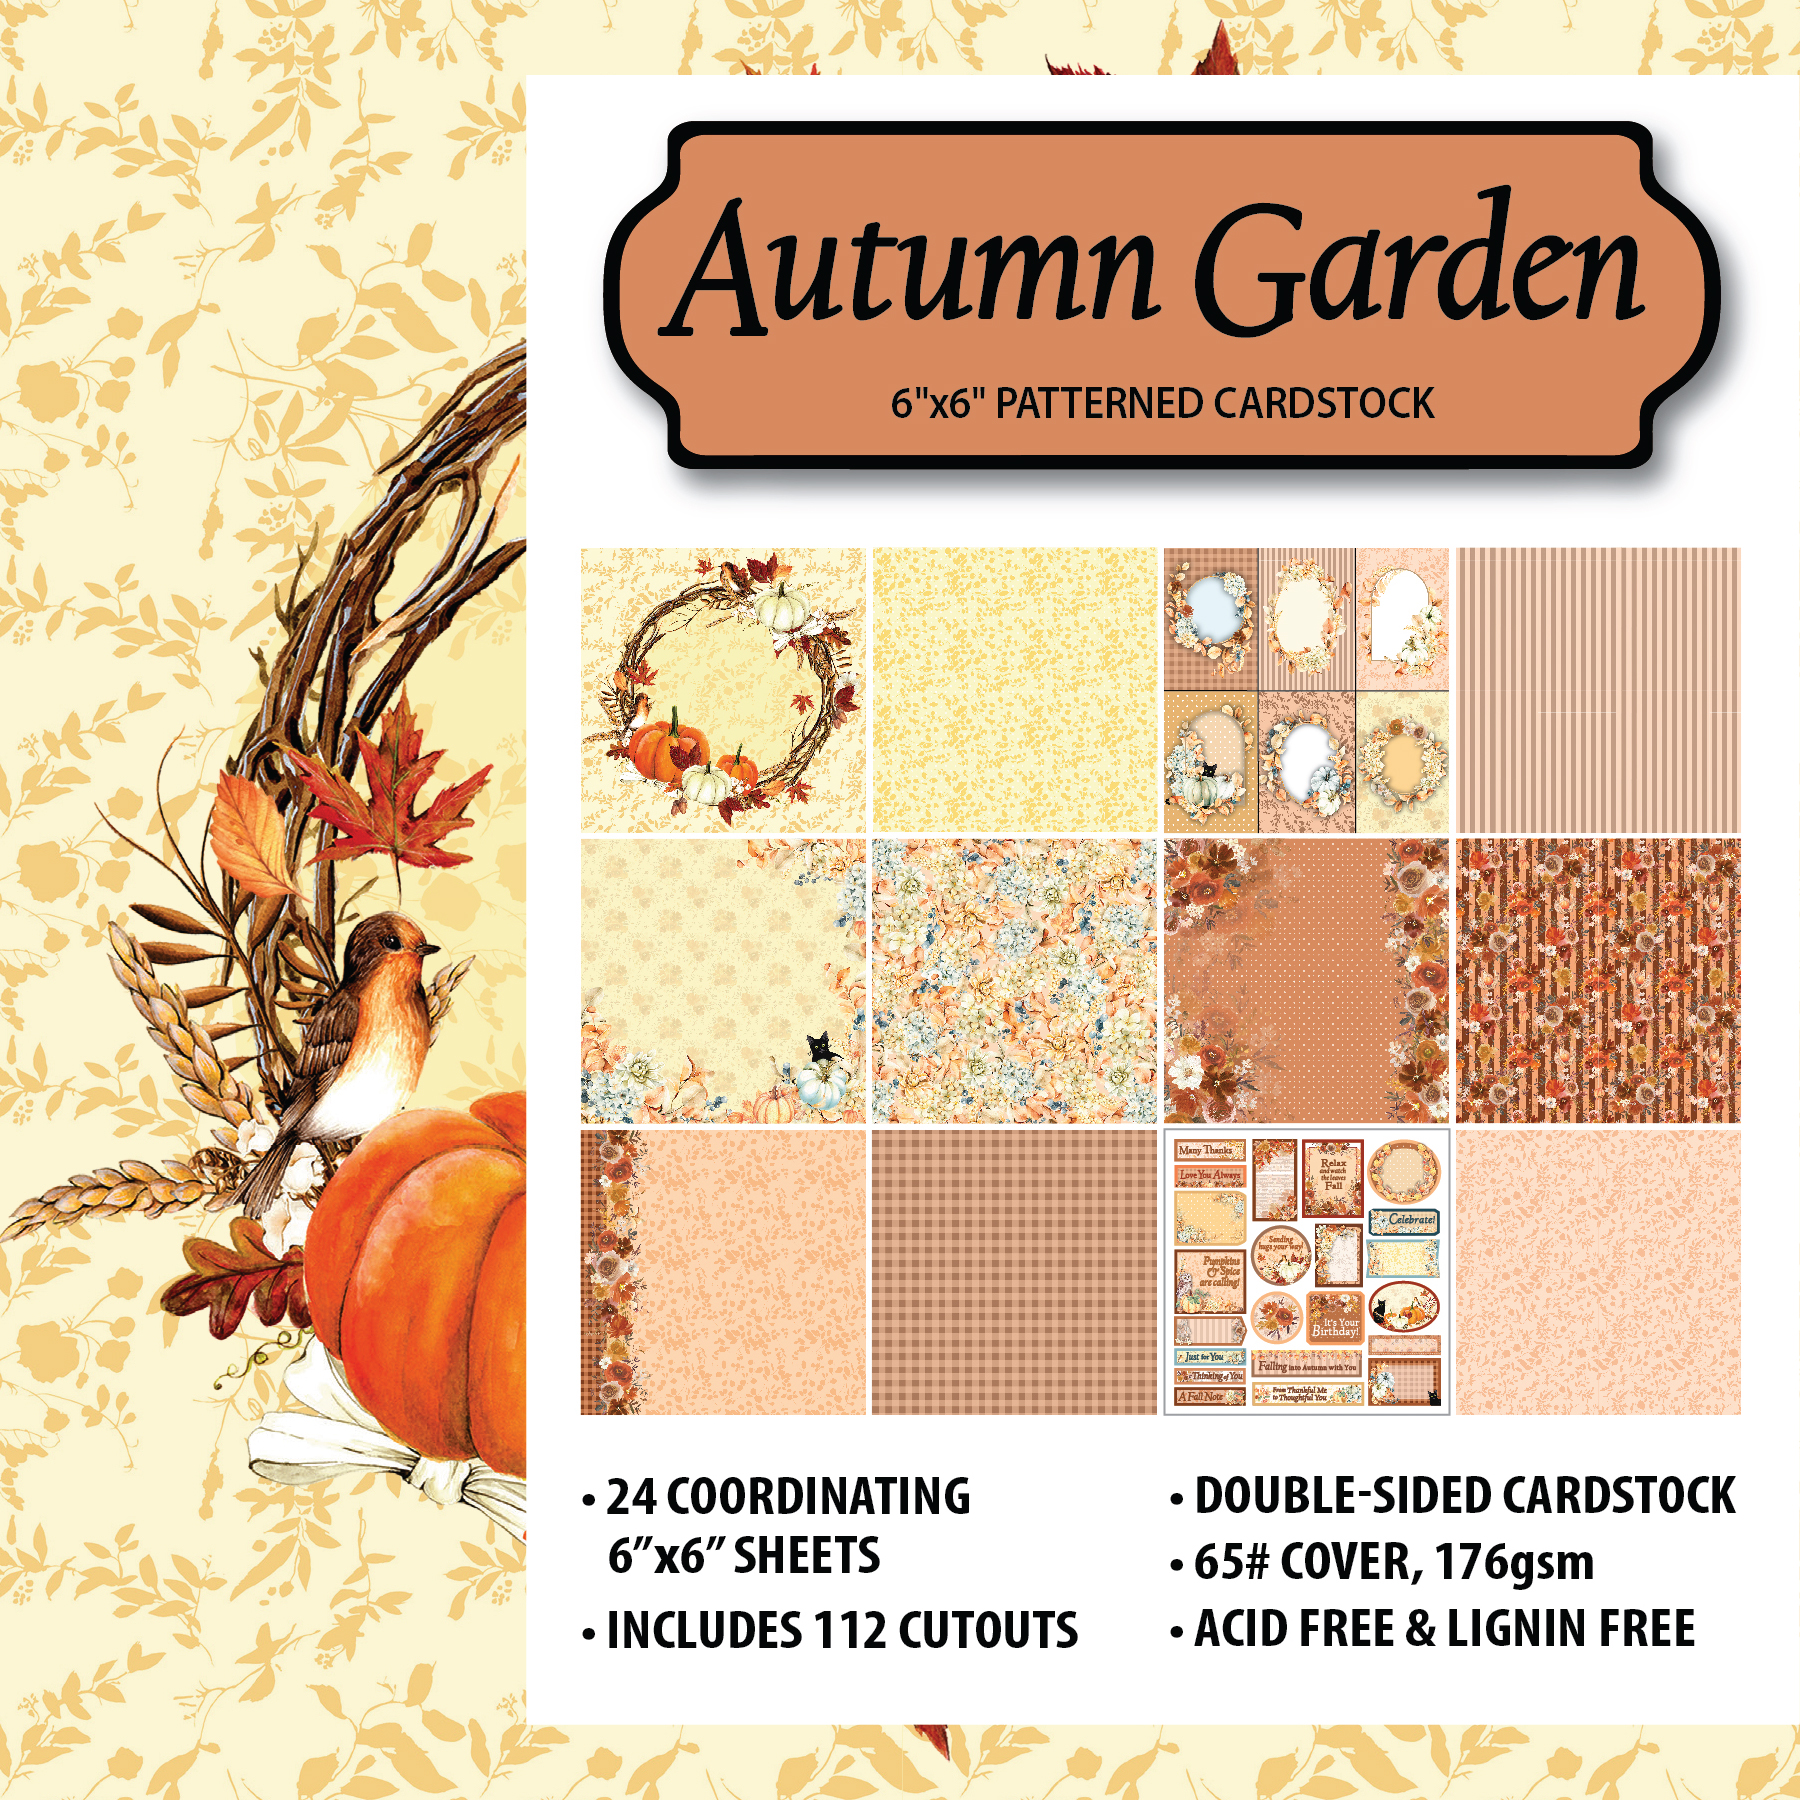 Autumn Garden 6x6 Patterned Cardstock